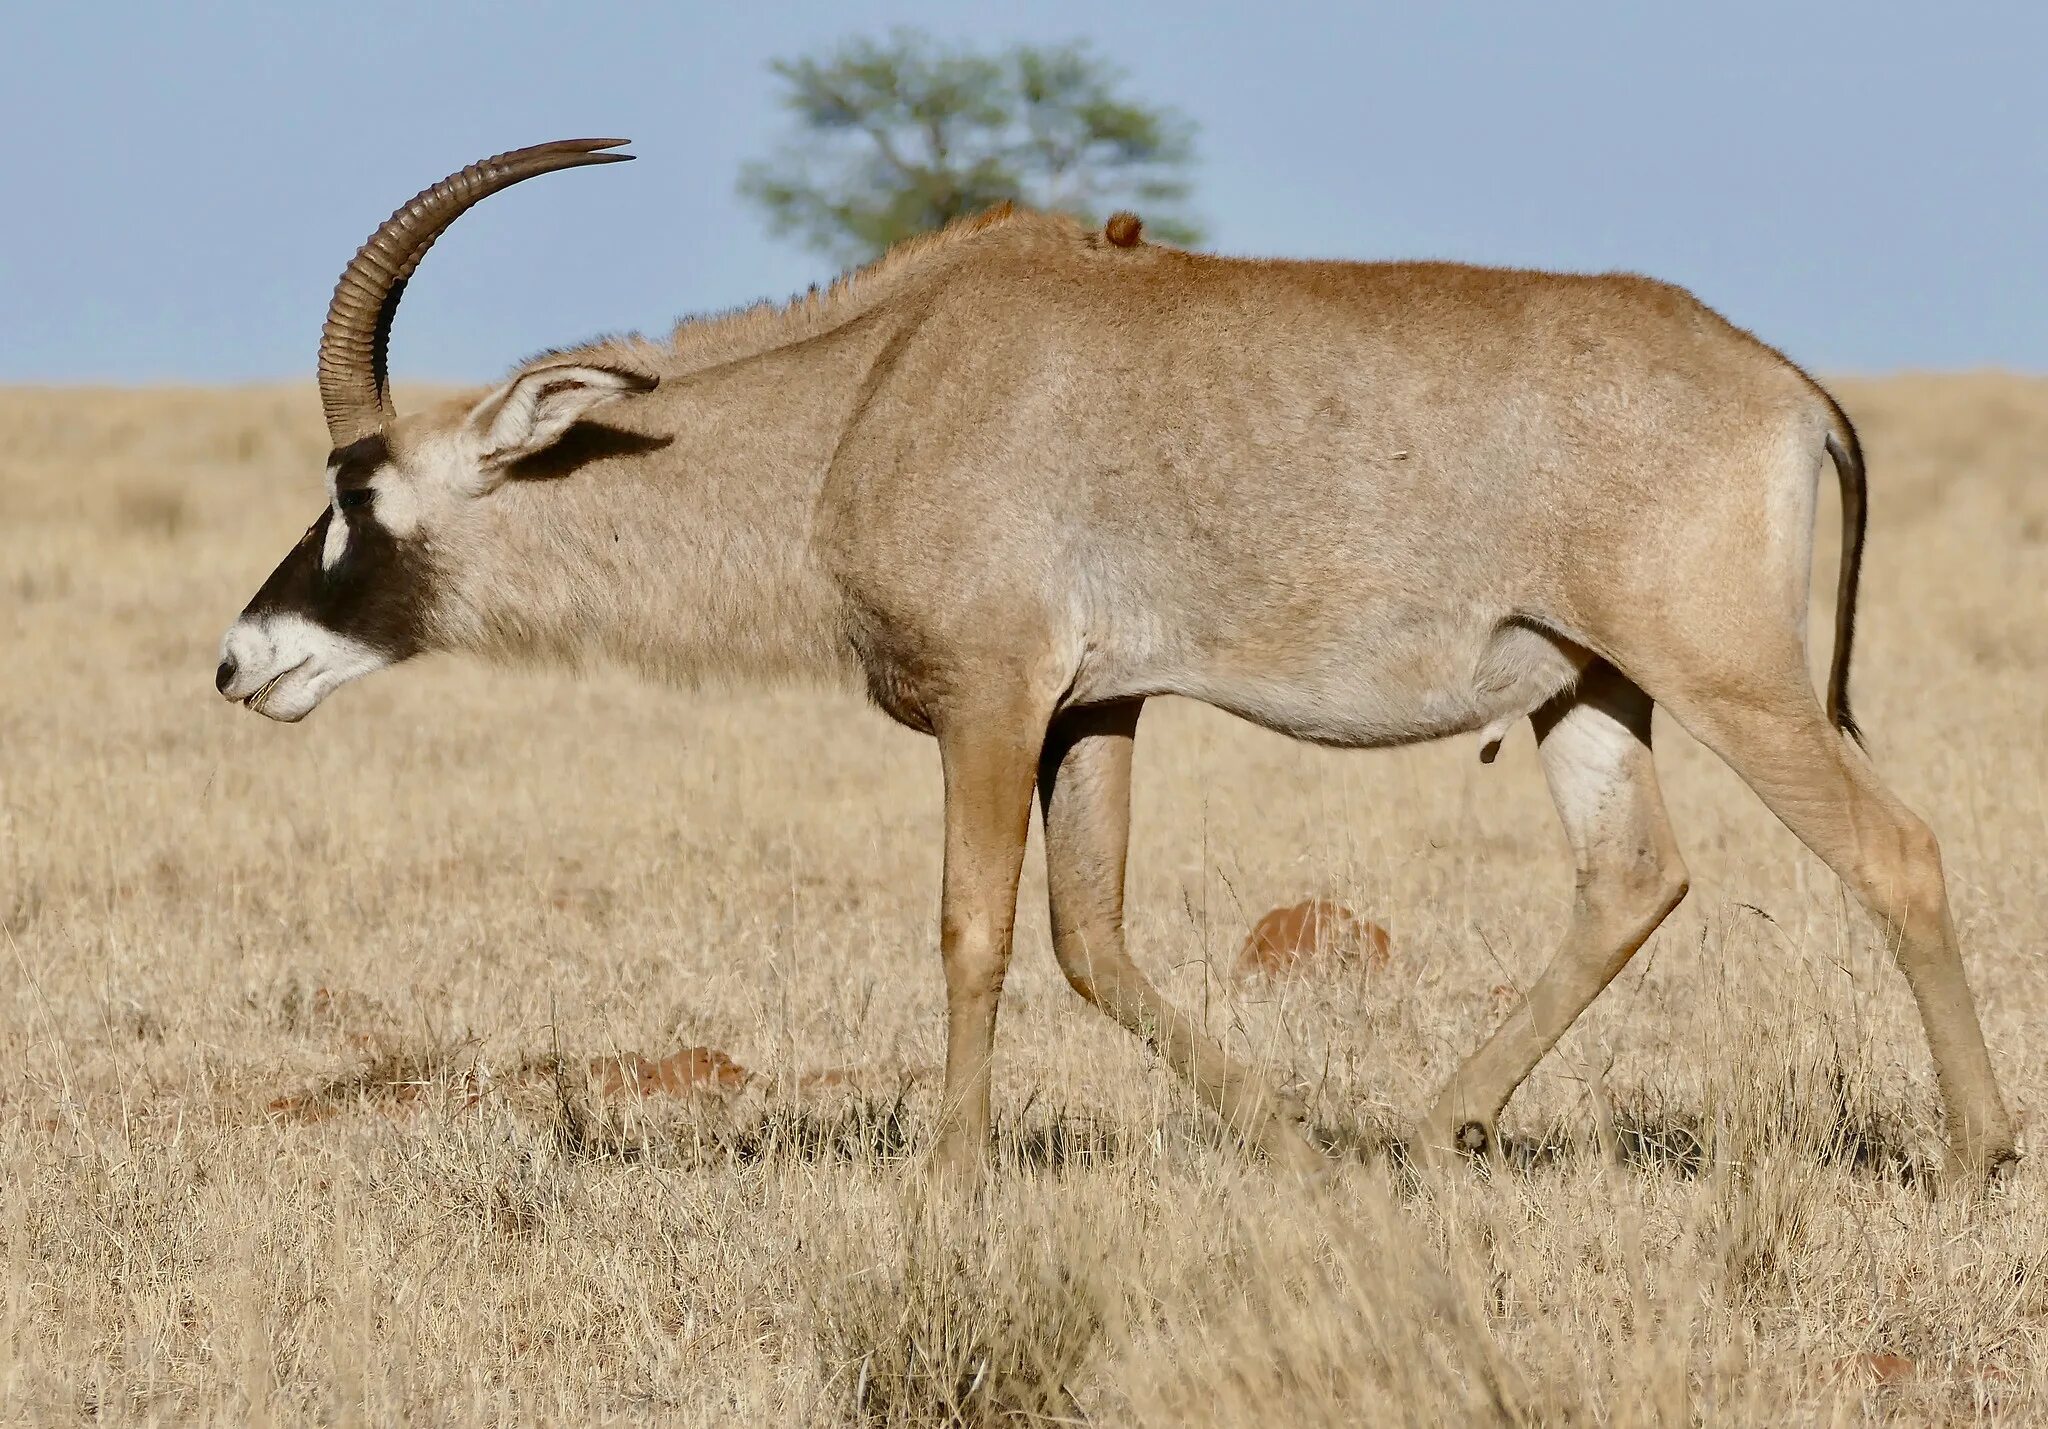 Саблерогая антилопа из африки 5 букв. Саблерогая антилопа. Антилопа нильгау. Лошадиная антилопа. Megalotragus.